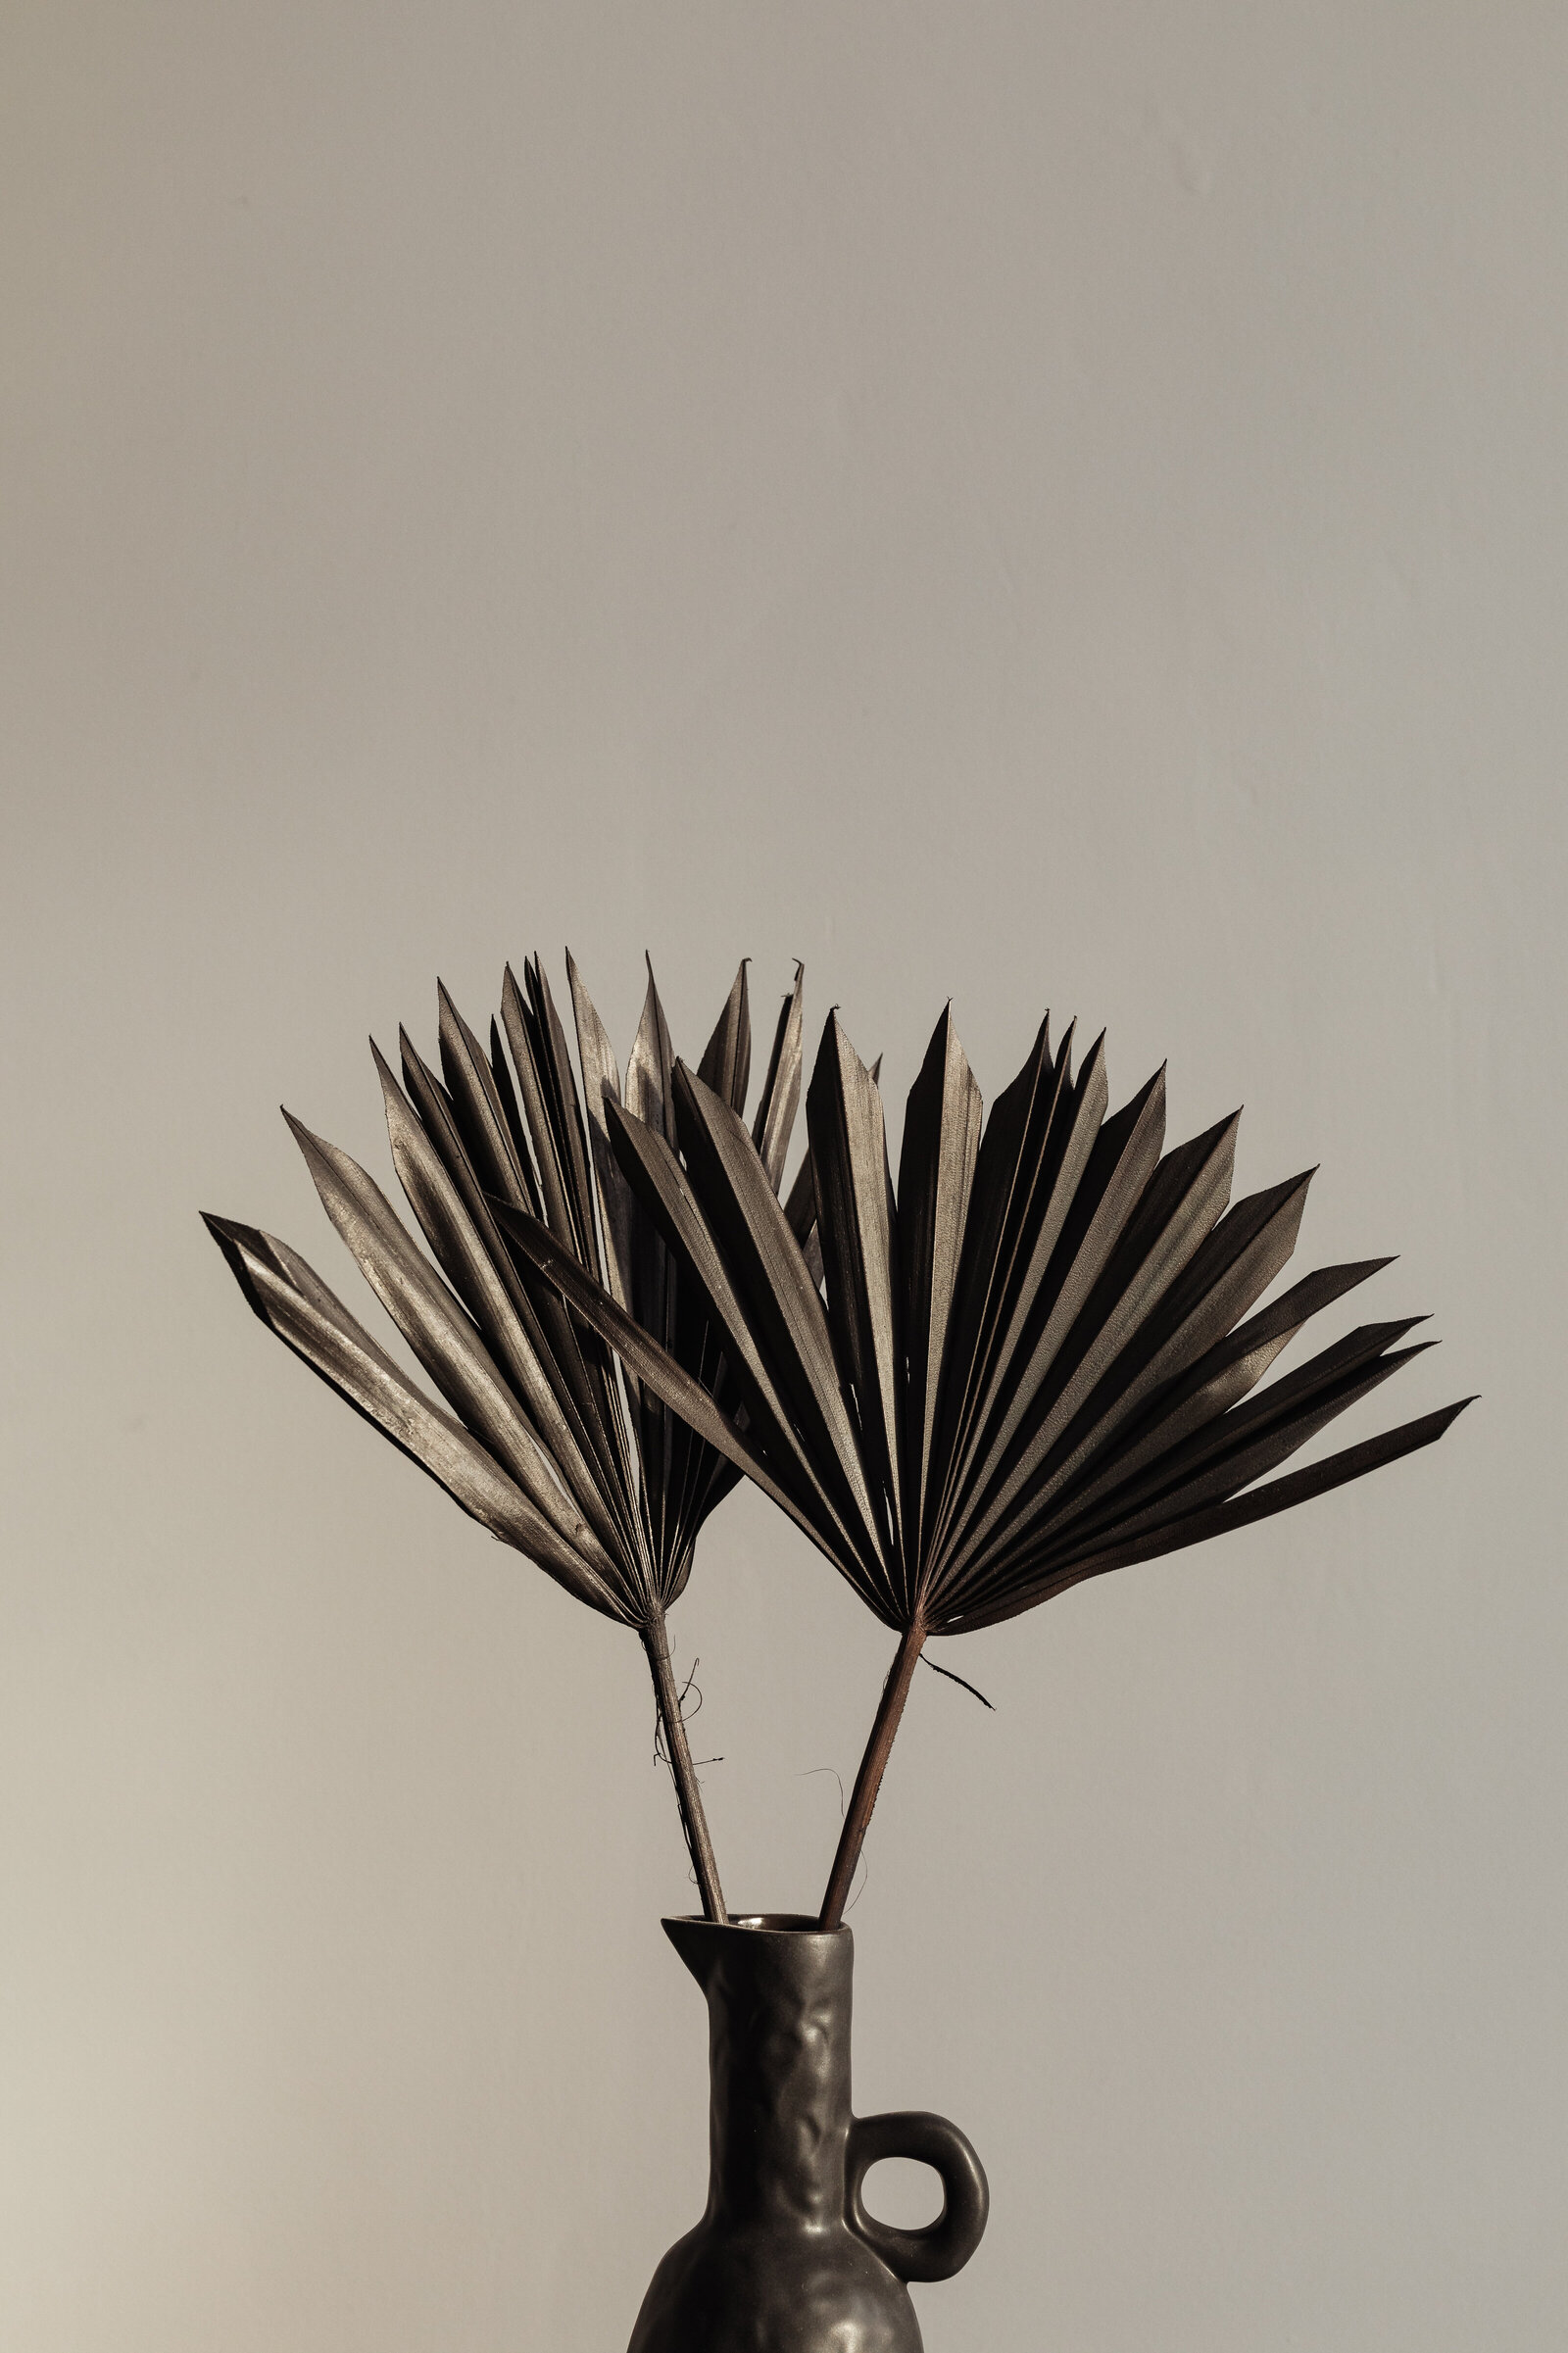 kaboompics_black-dried-palm-leaves-black-ceramic-vase-backgrounds-29585